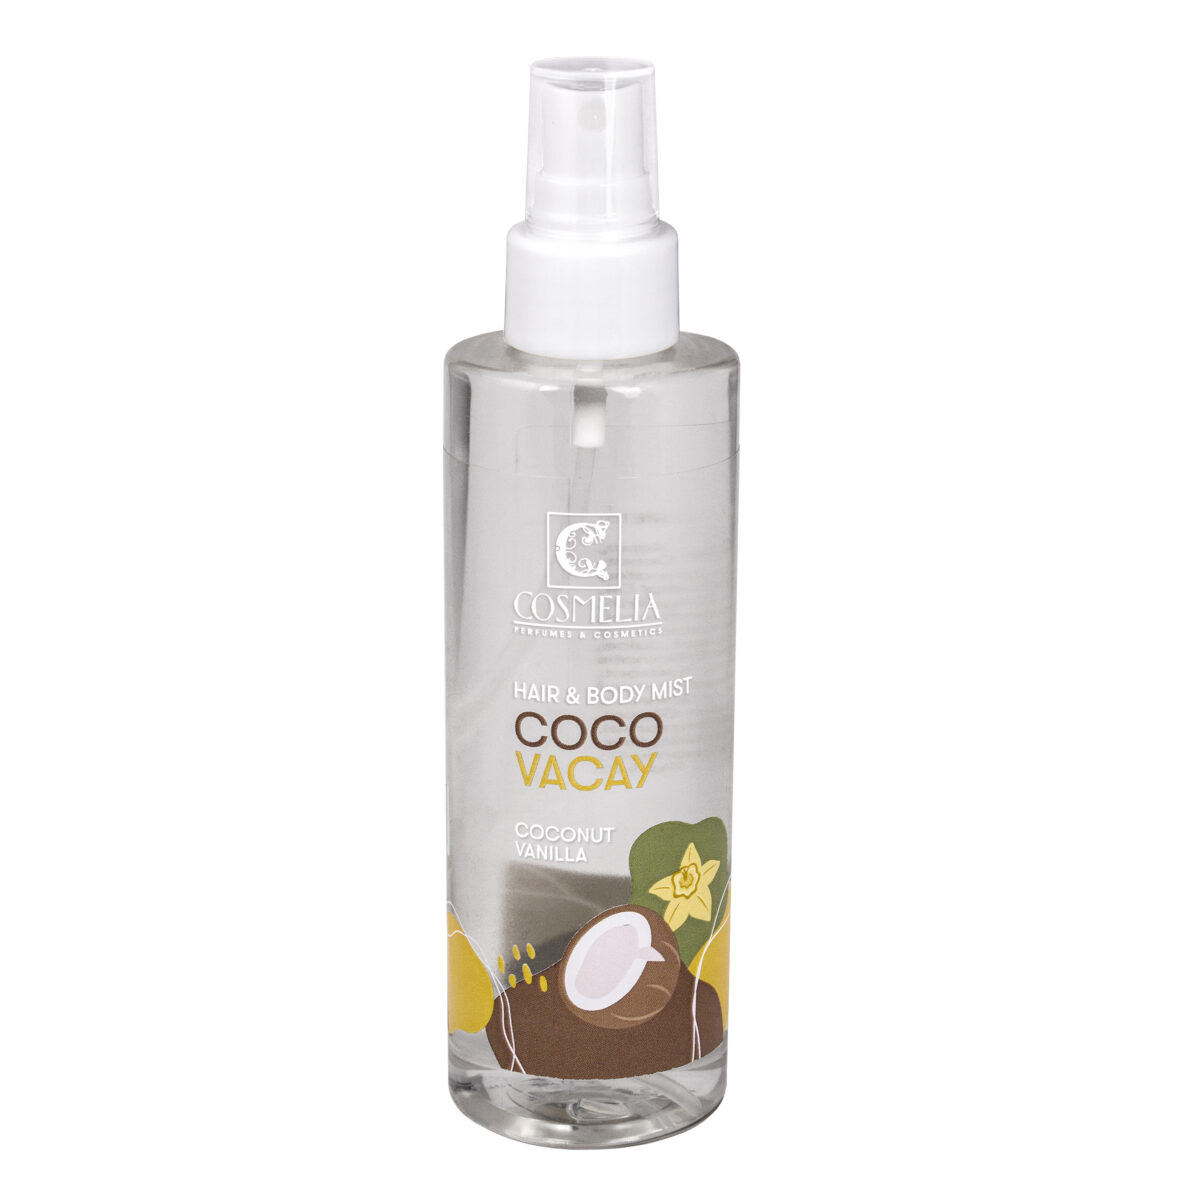 Cosmelia Coco Vacay Hair & Body Mist 200ml